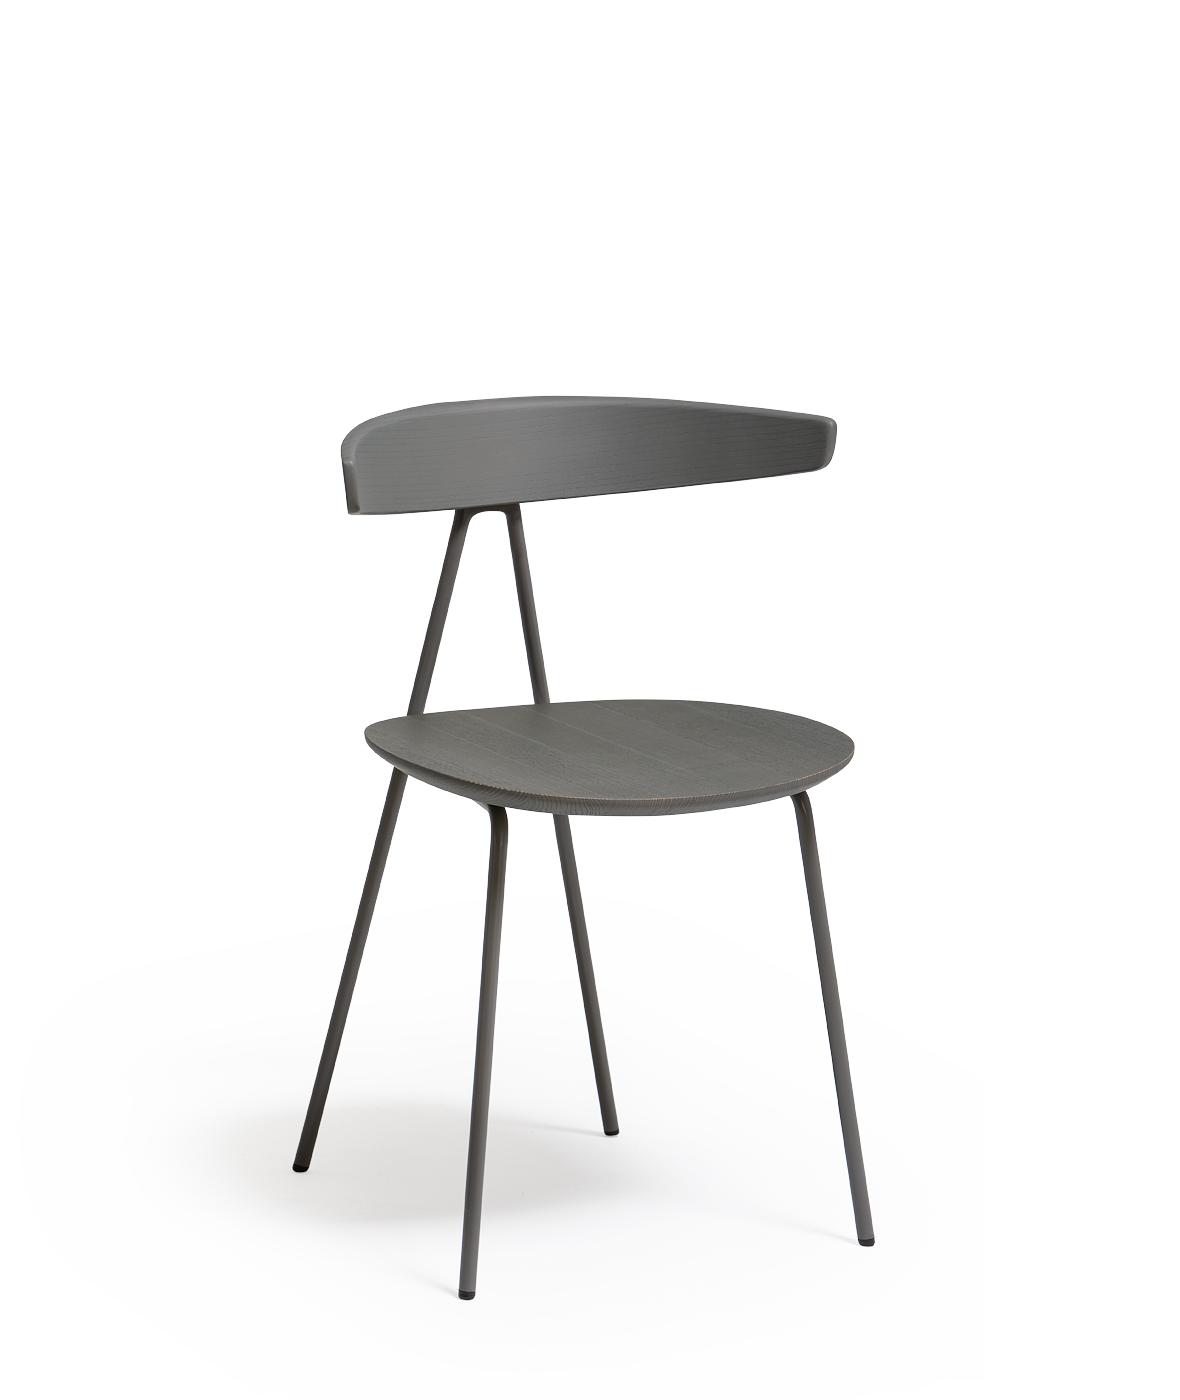 Compass chair with metallic legs - Vergés